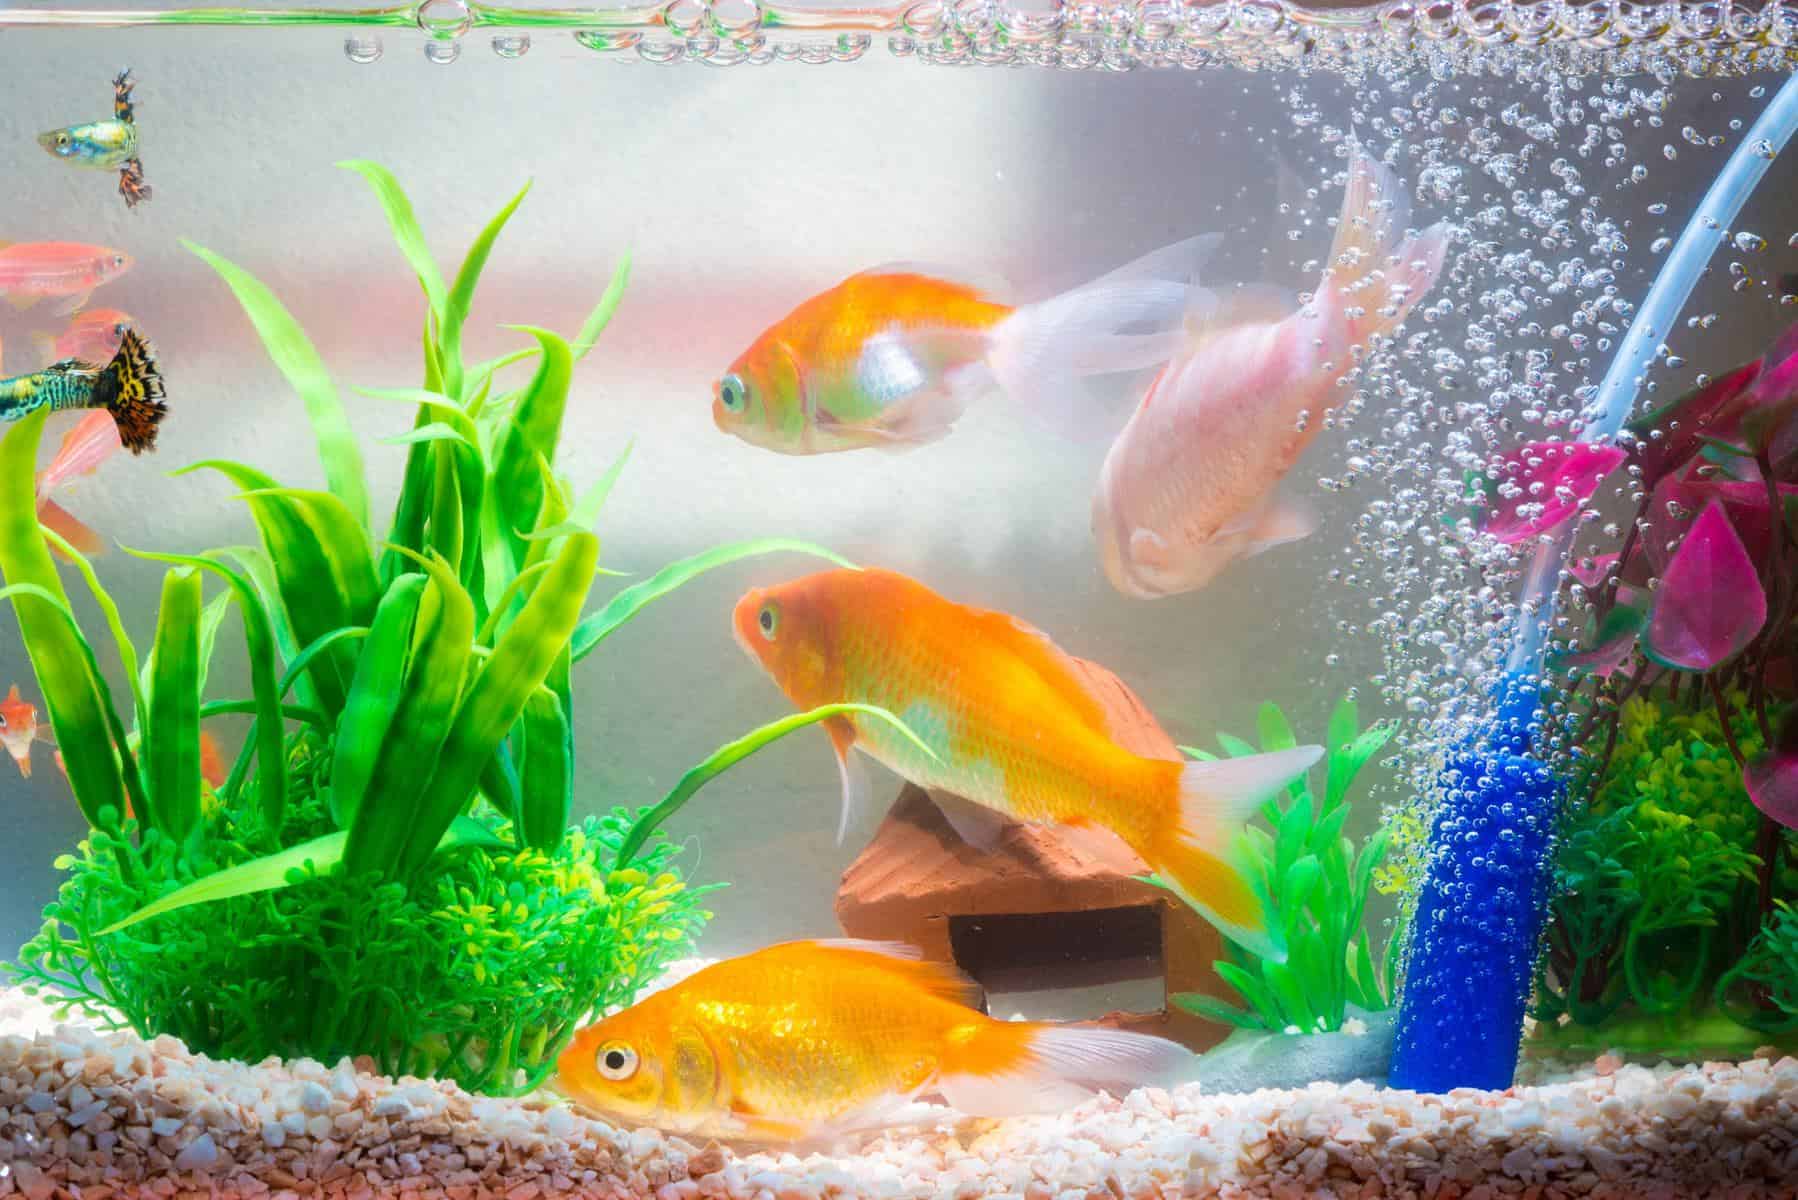 ammonia in fish tank with goldfish